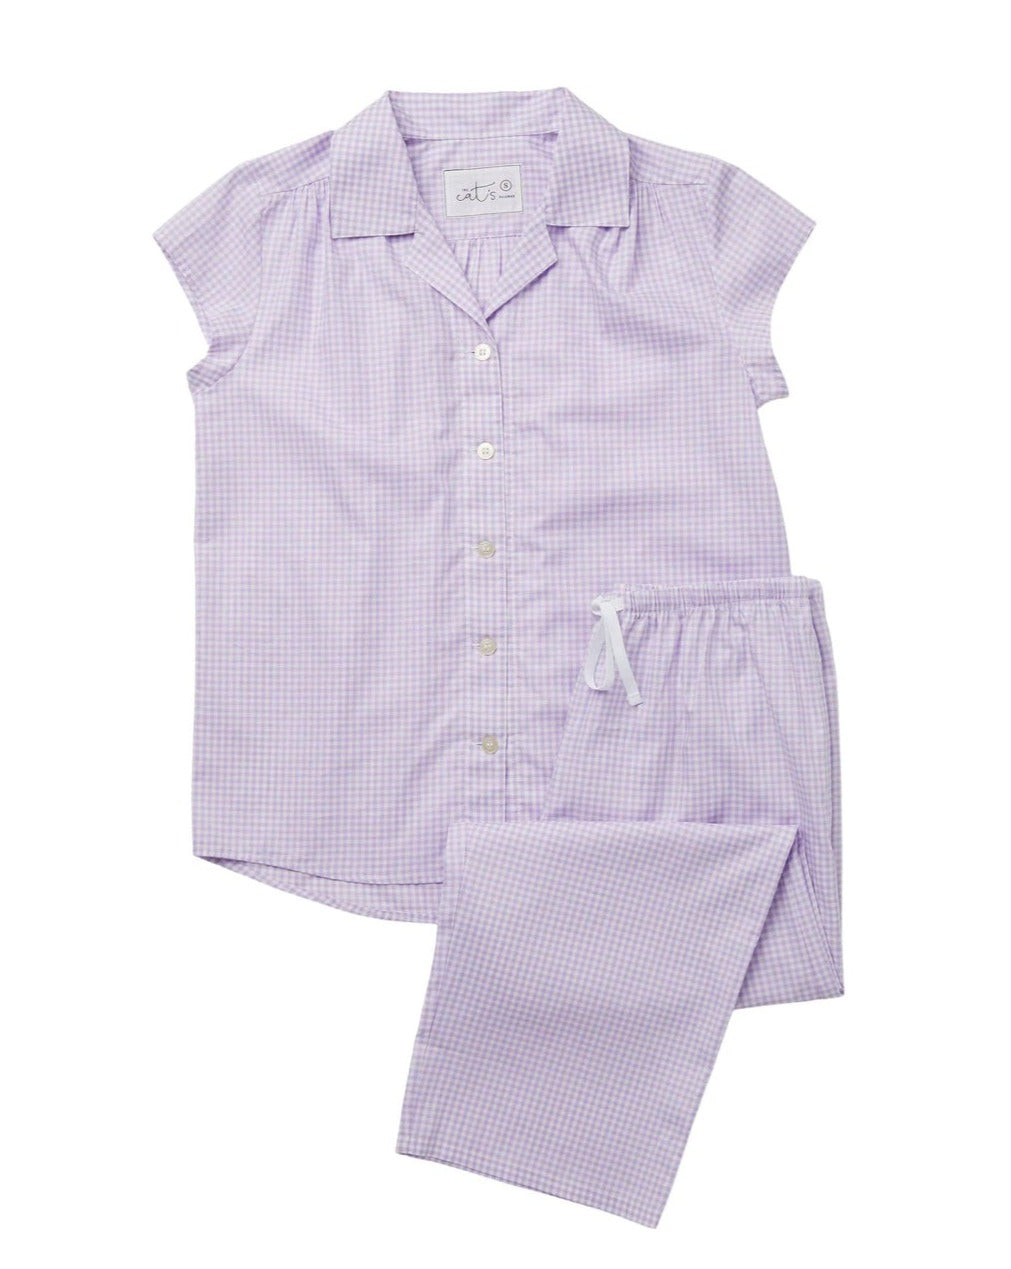 Capri Lavender Gingham Luxe Pima Cotton Set: Size S